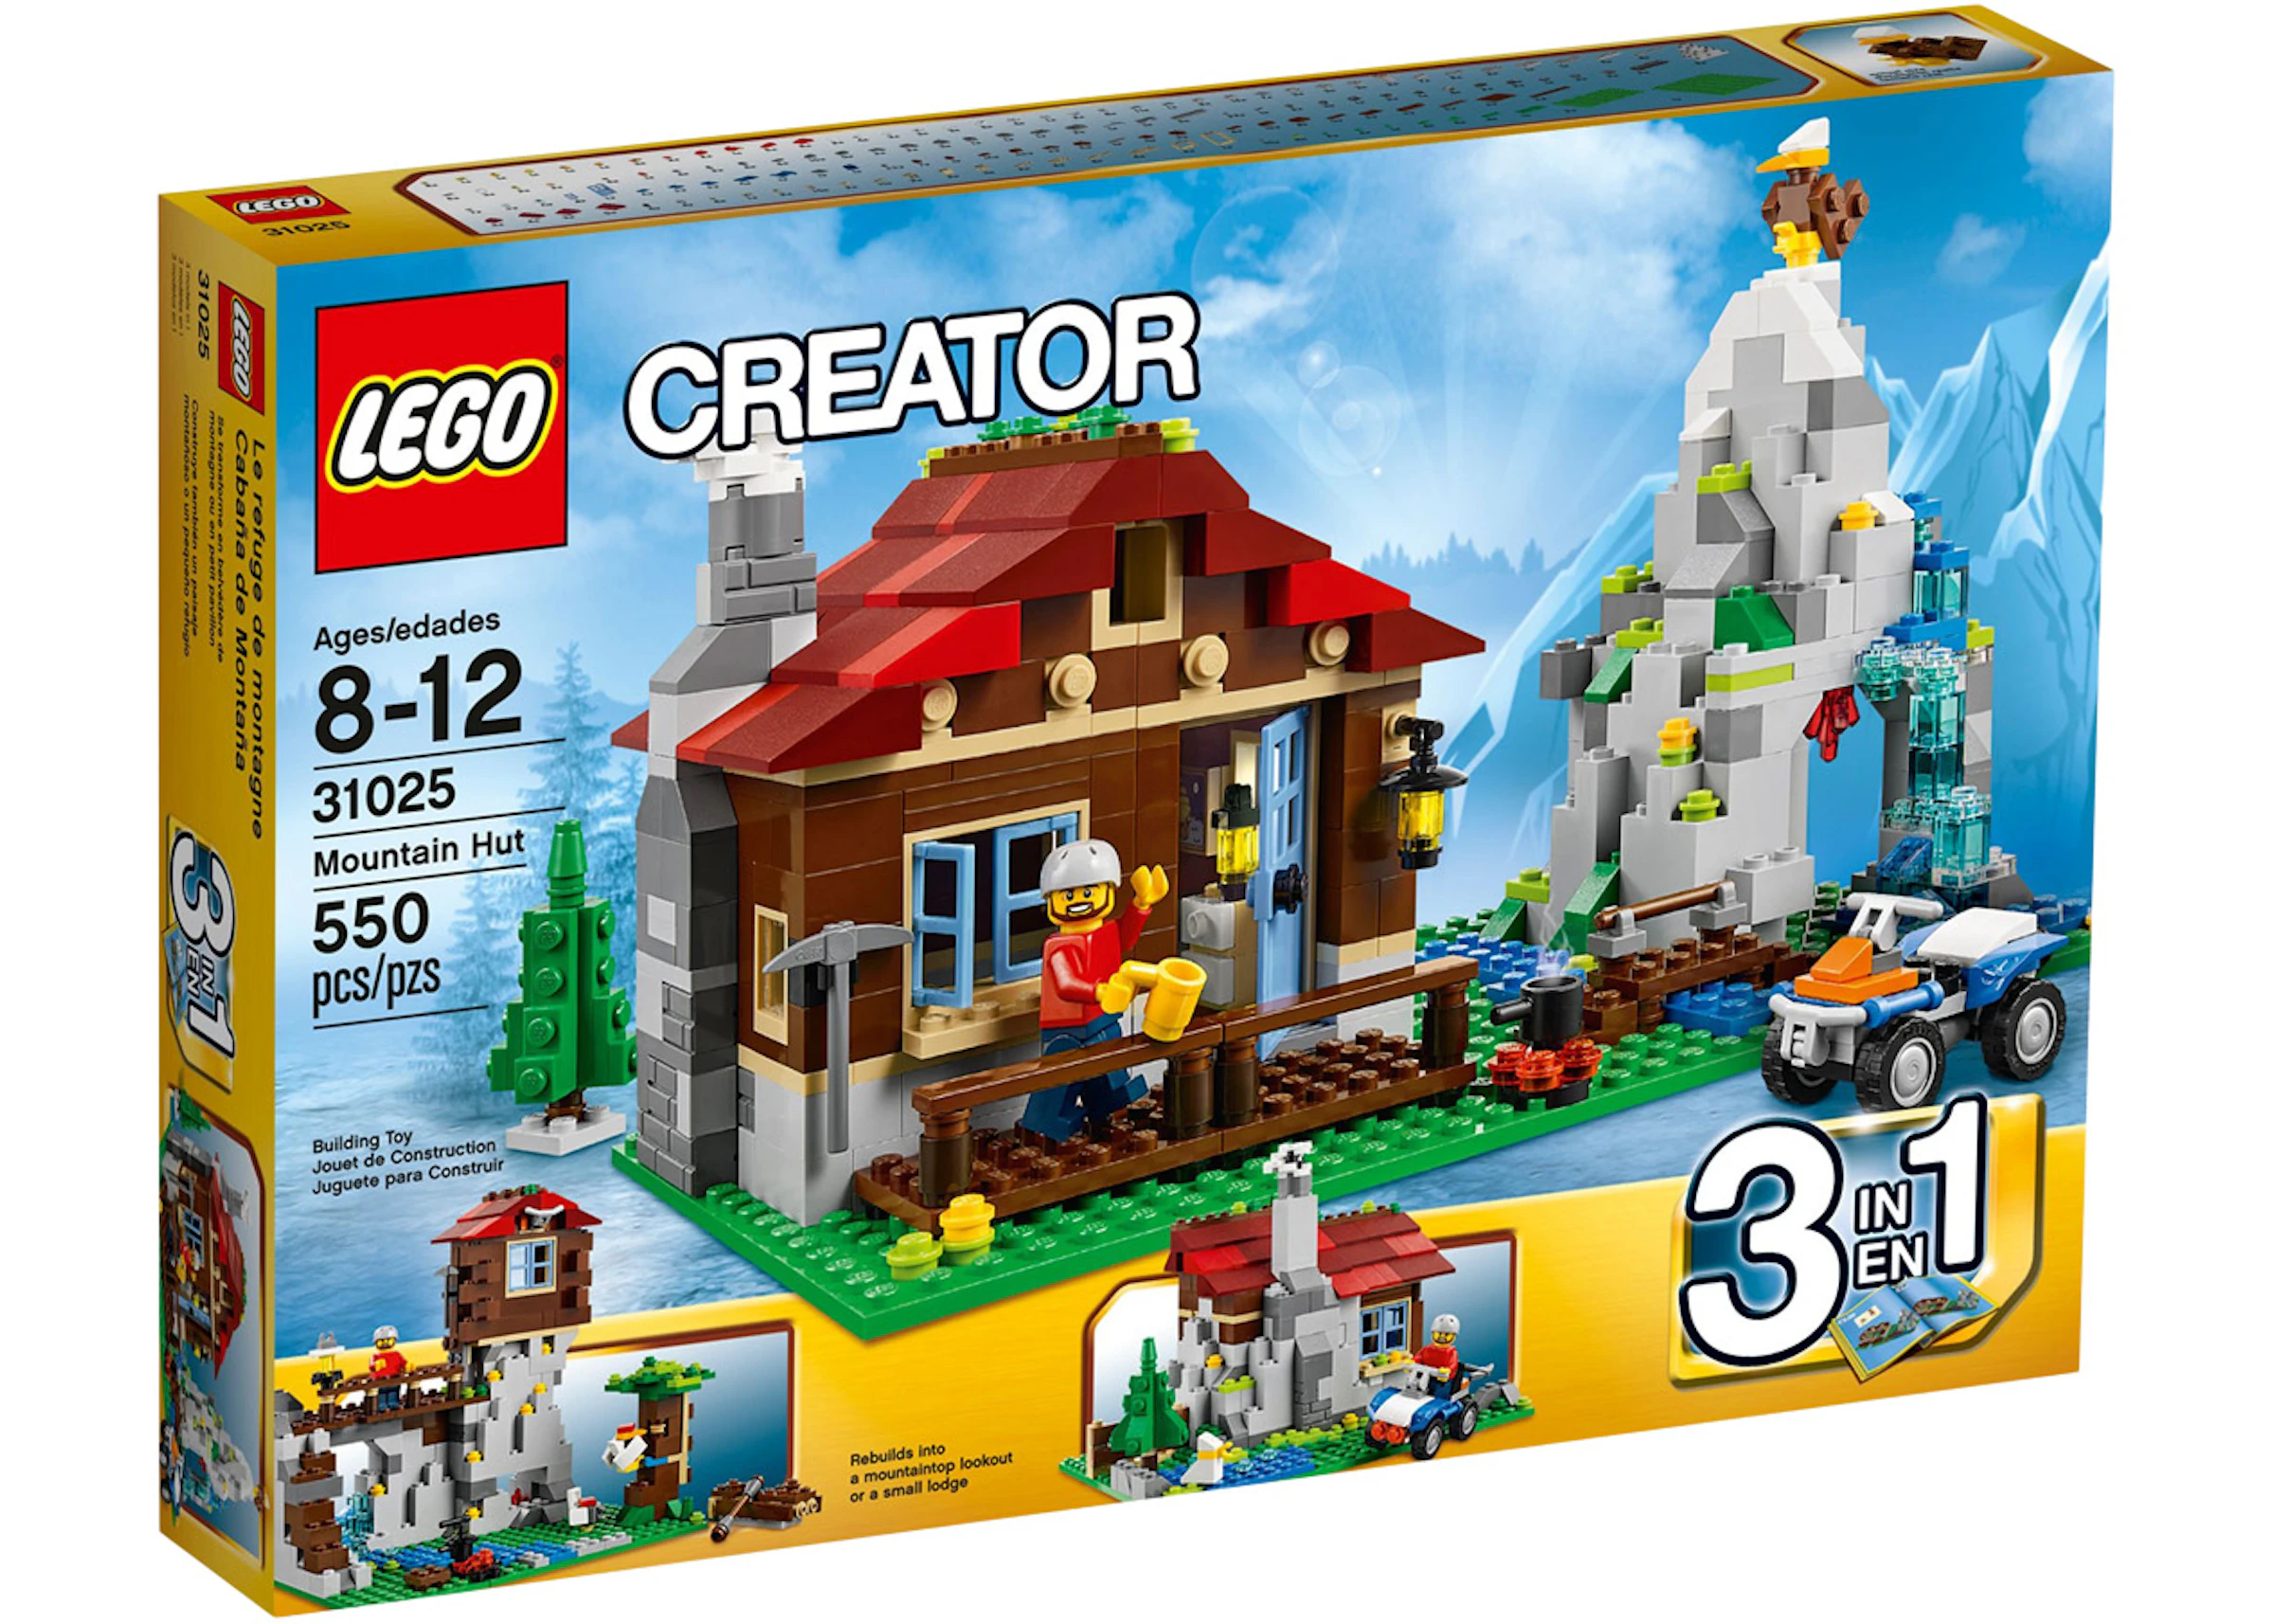 manuskript hold Udvinding LEGO Creator Mountain Hut Set 31025 - US